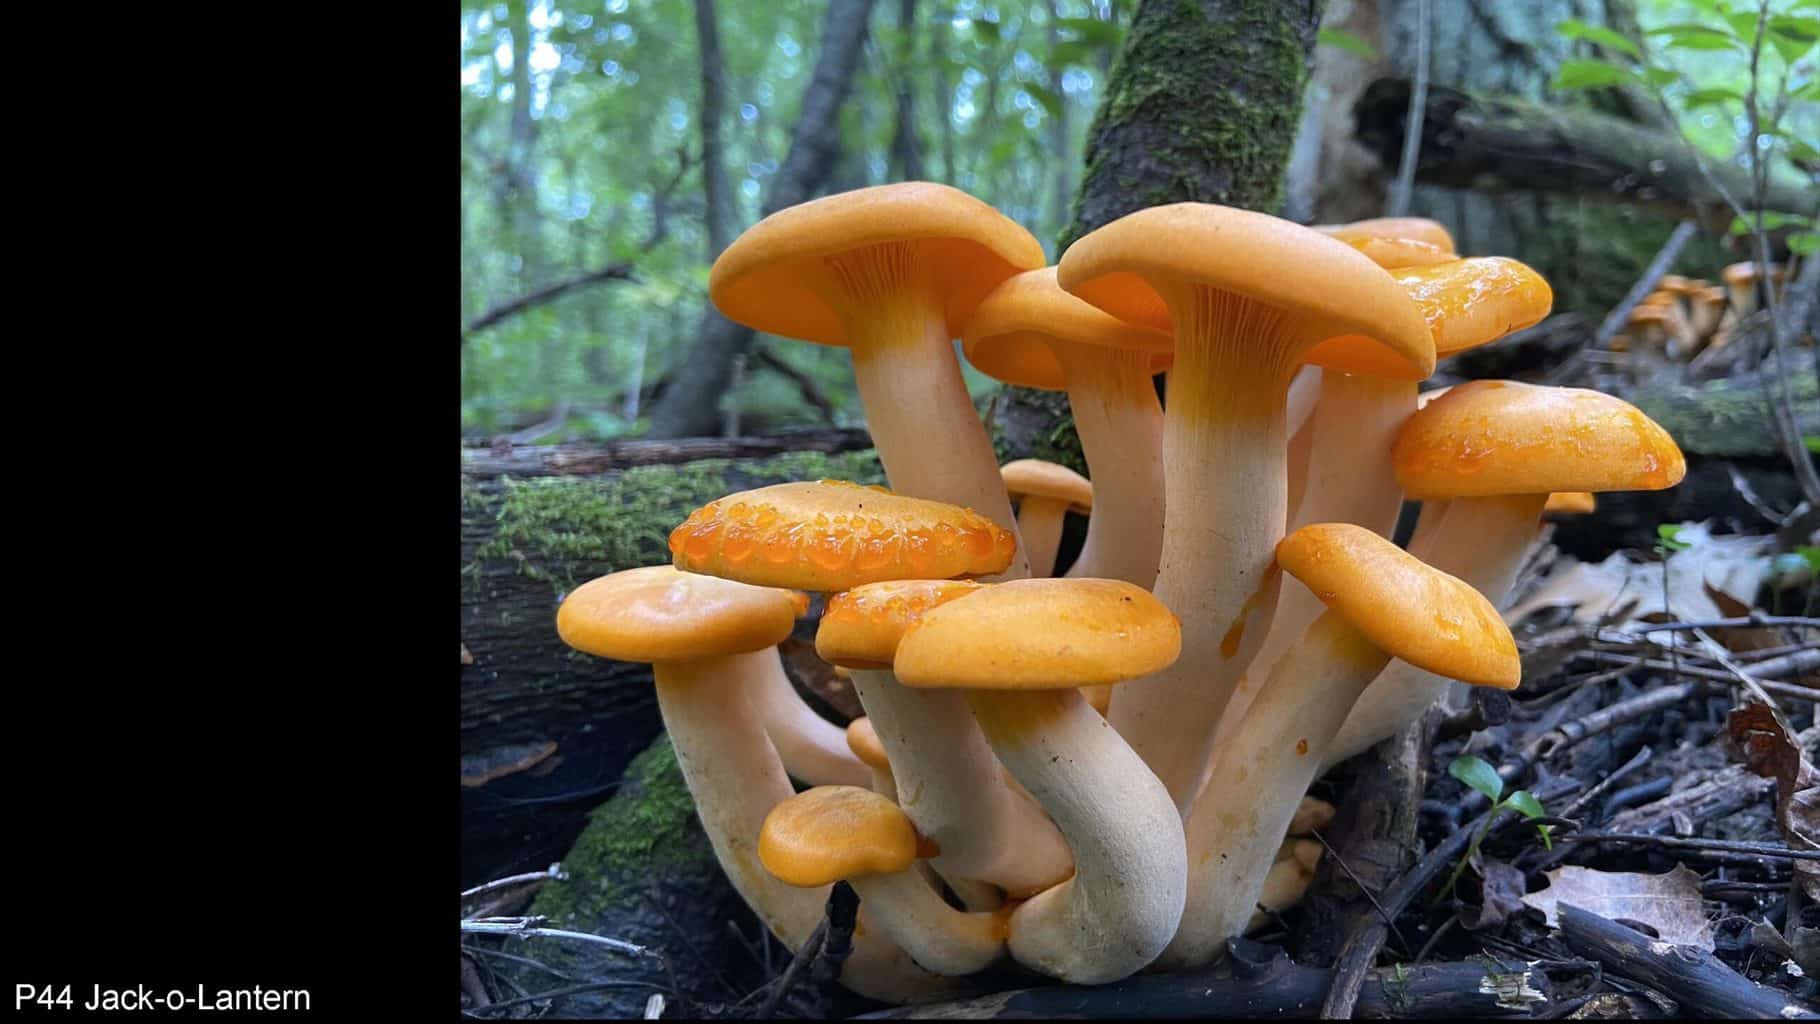 Minnesota Mycological Society A Society for the Study of Mushrooms